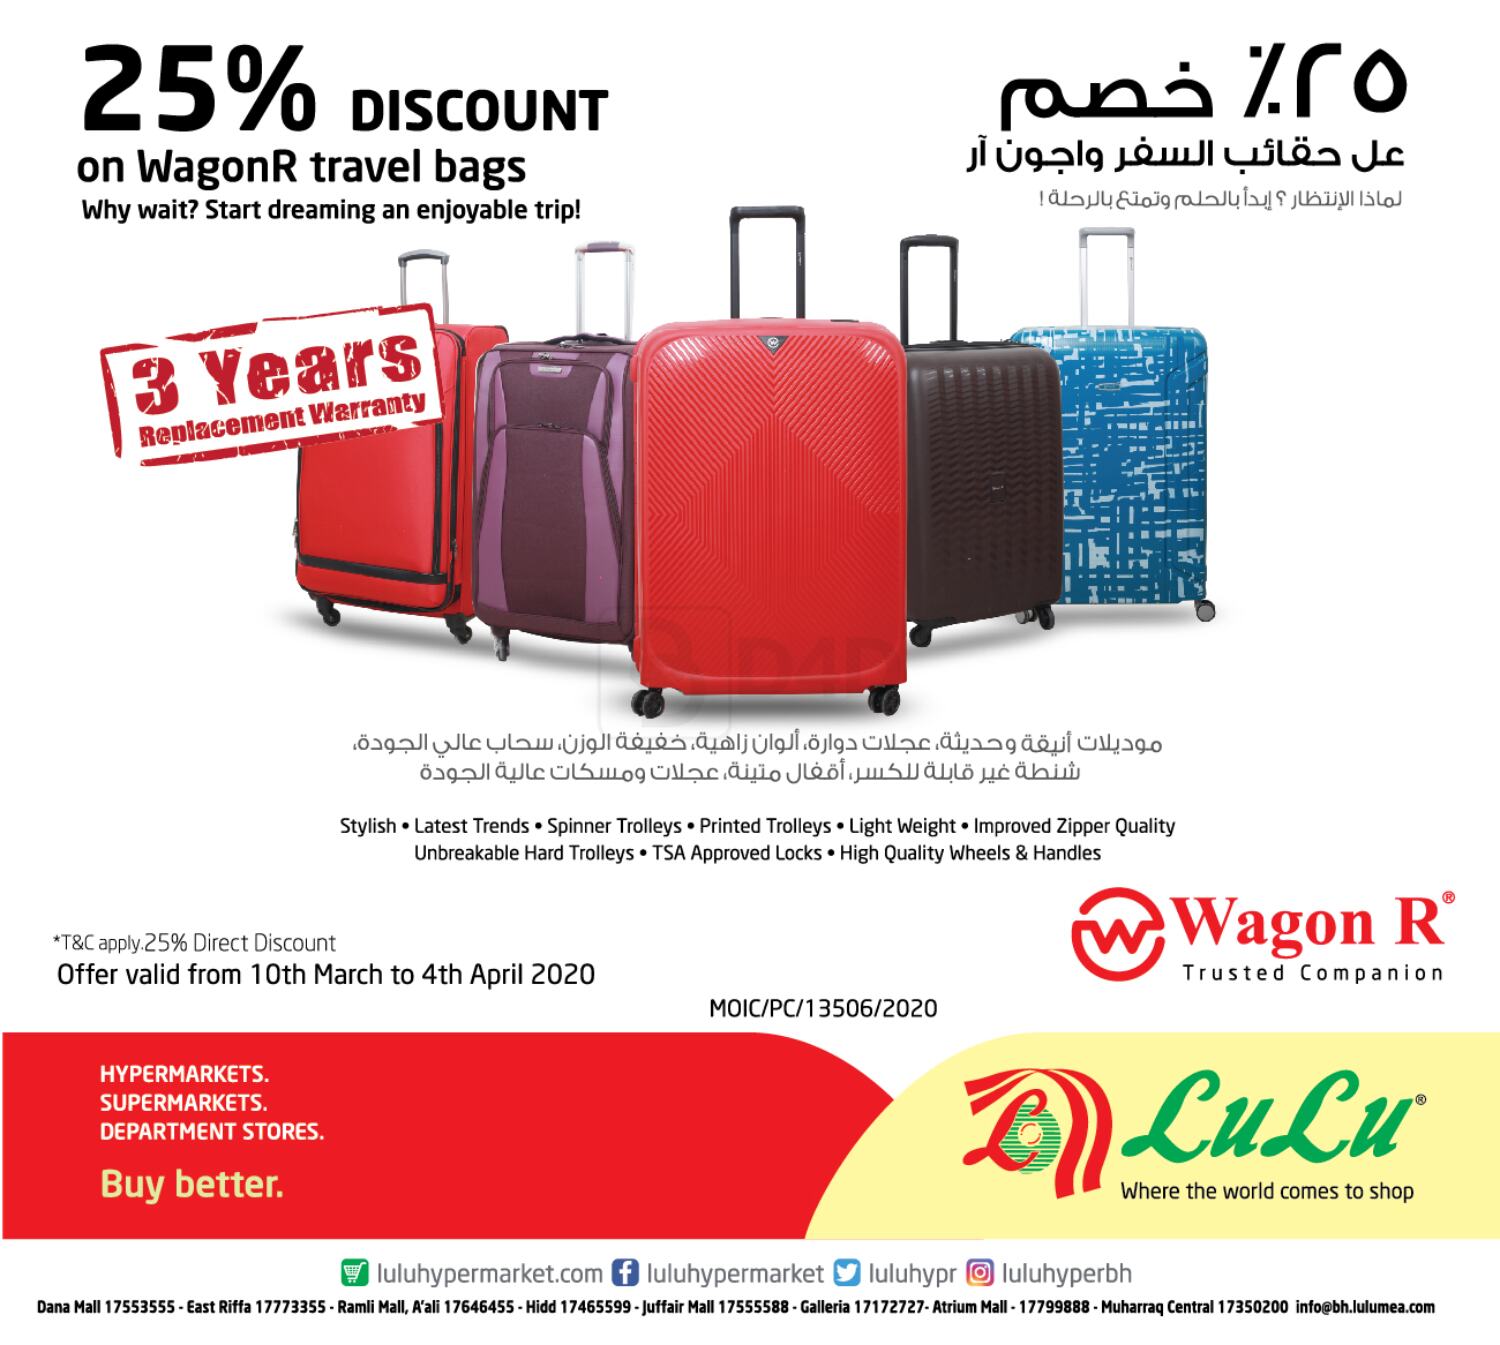 Doha Discounts on X: Lulu Wagon R luggage Offer 16 June to 16